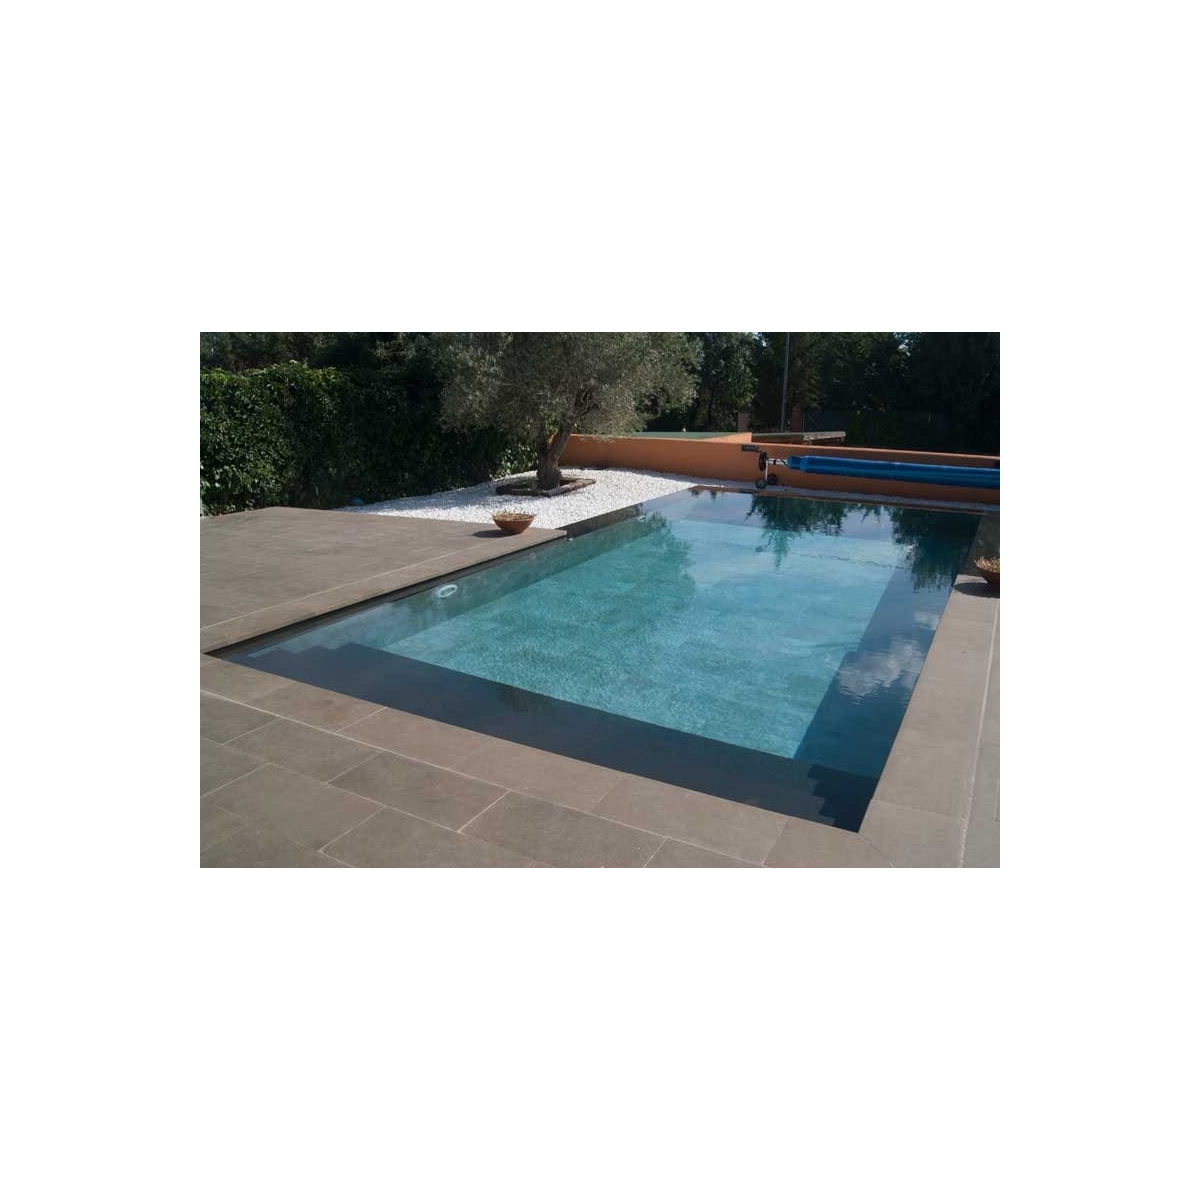 Cópia reta para piscina Tao Castanho L62 62,6x31,7x3,8 Rosagres